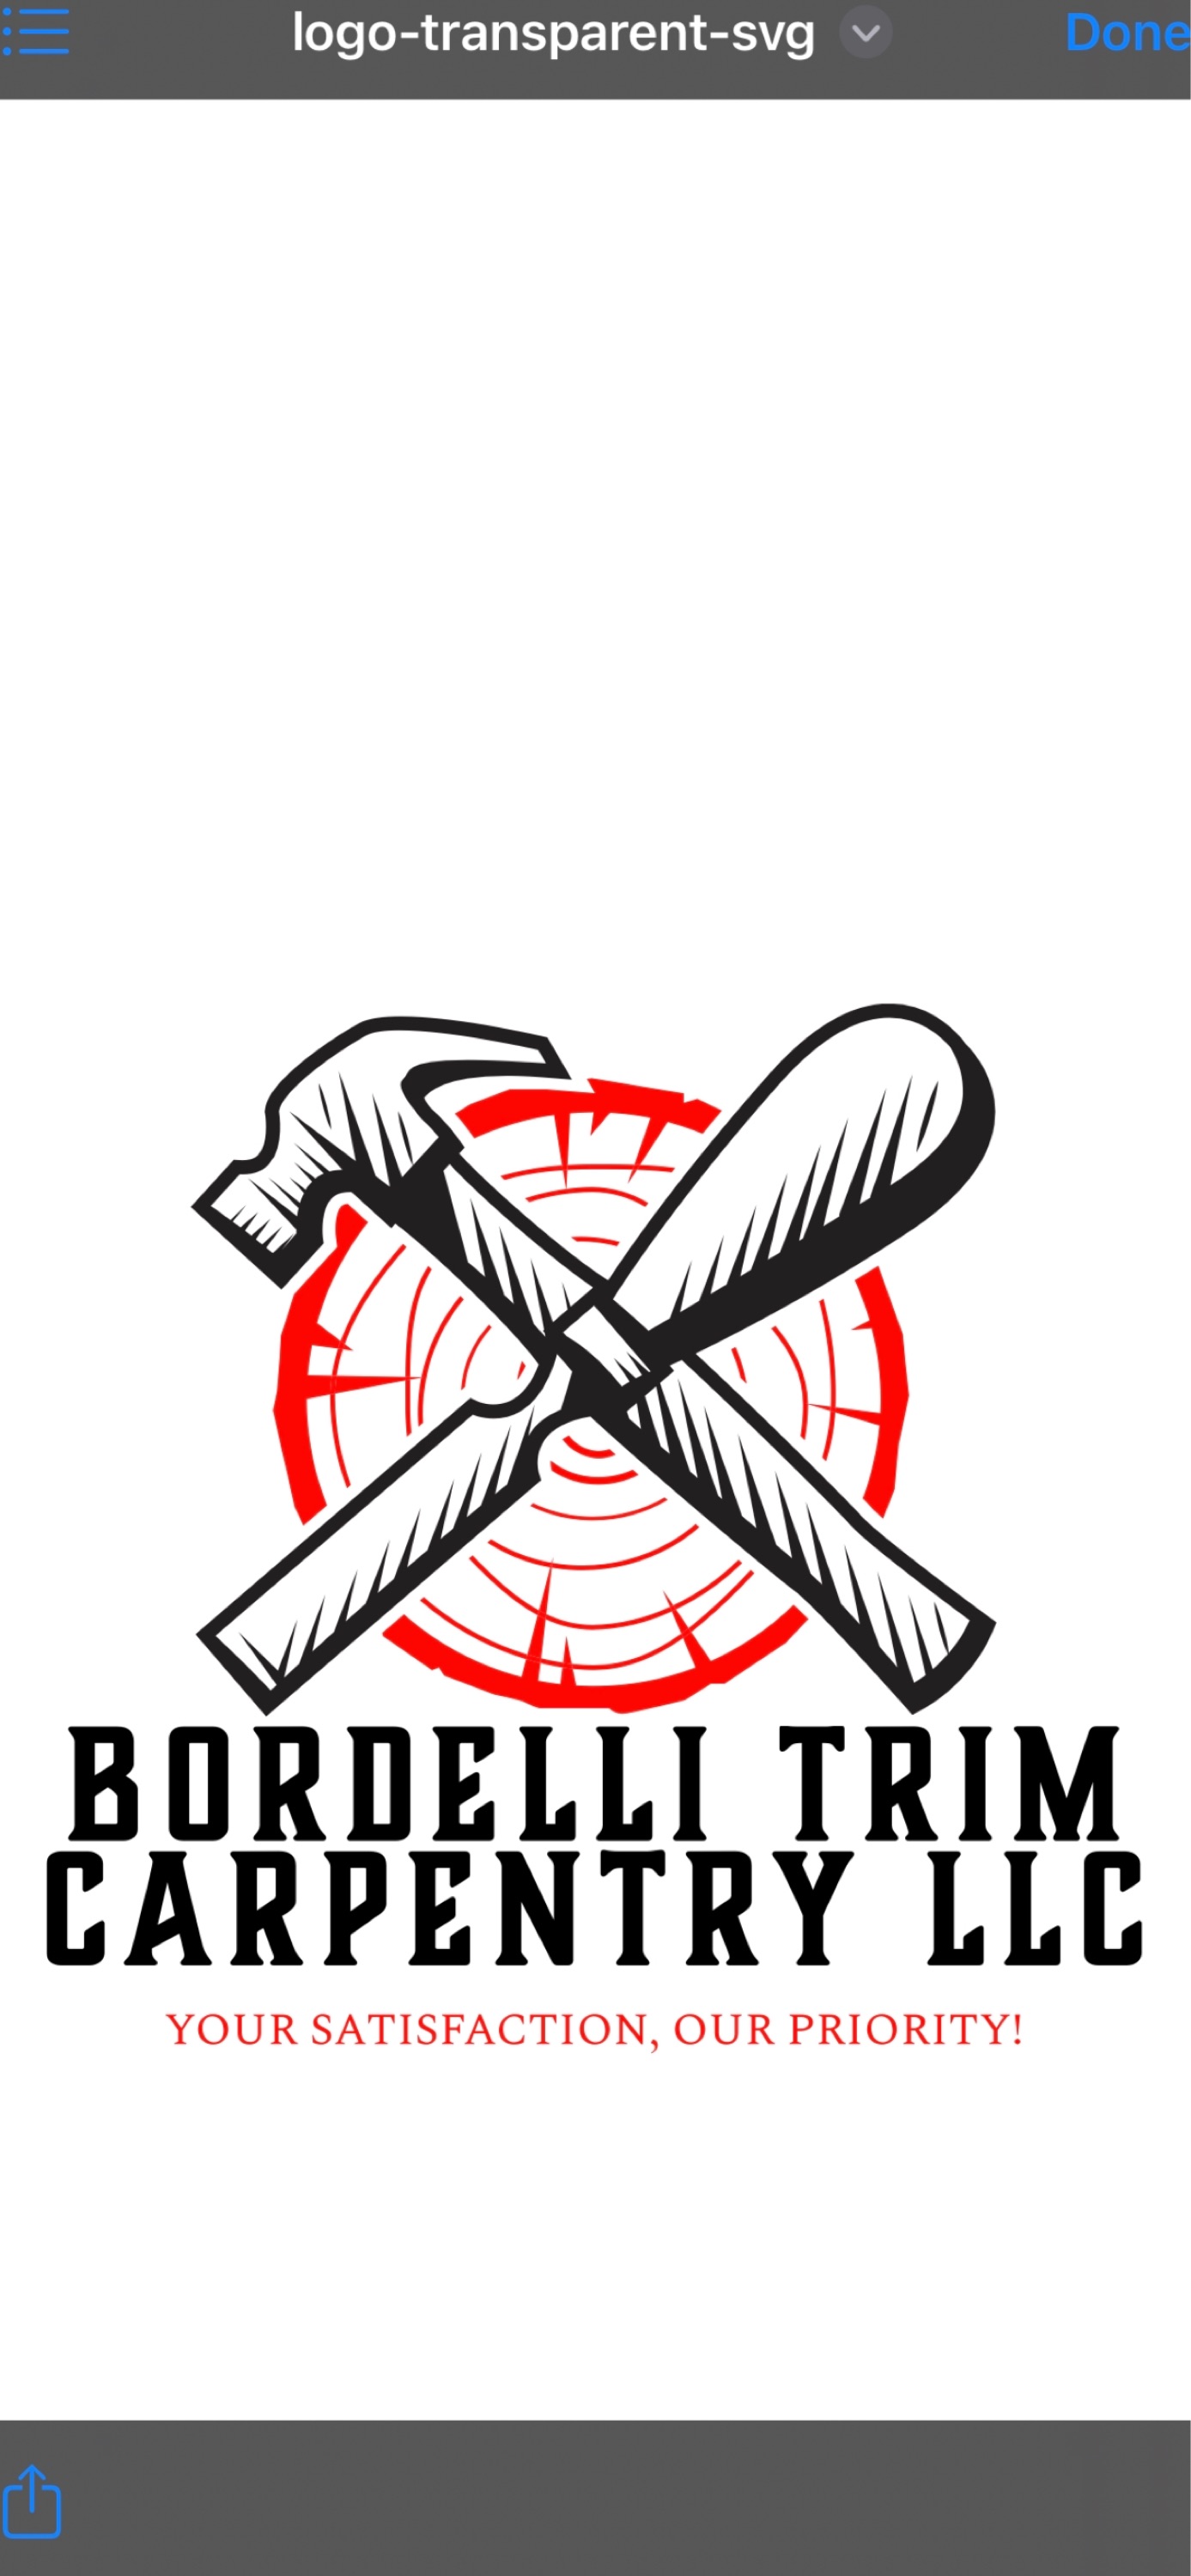 Bordelli Trim Carpentry LLC Logo